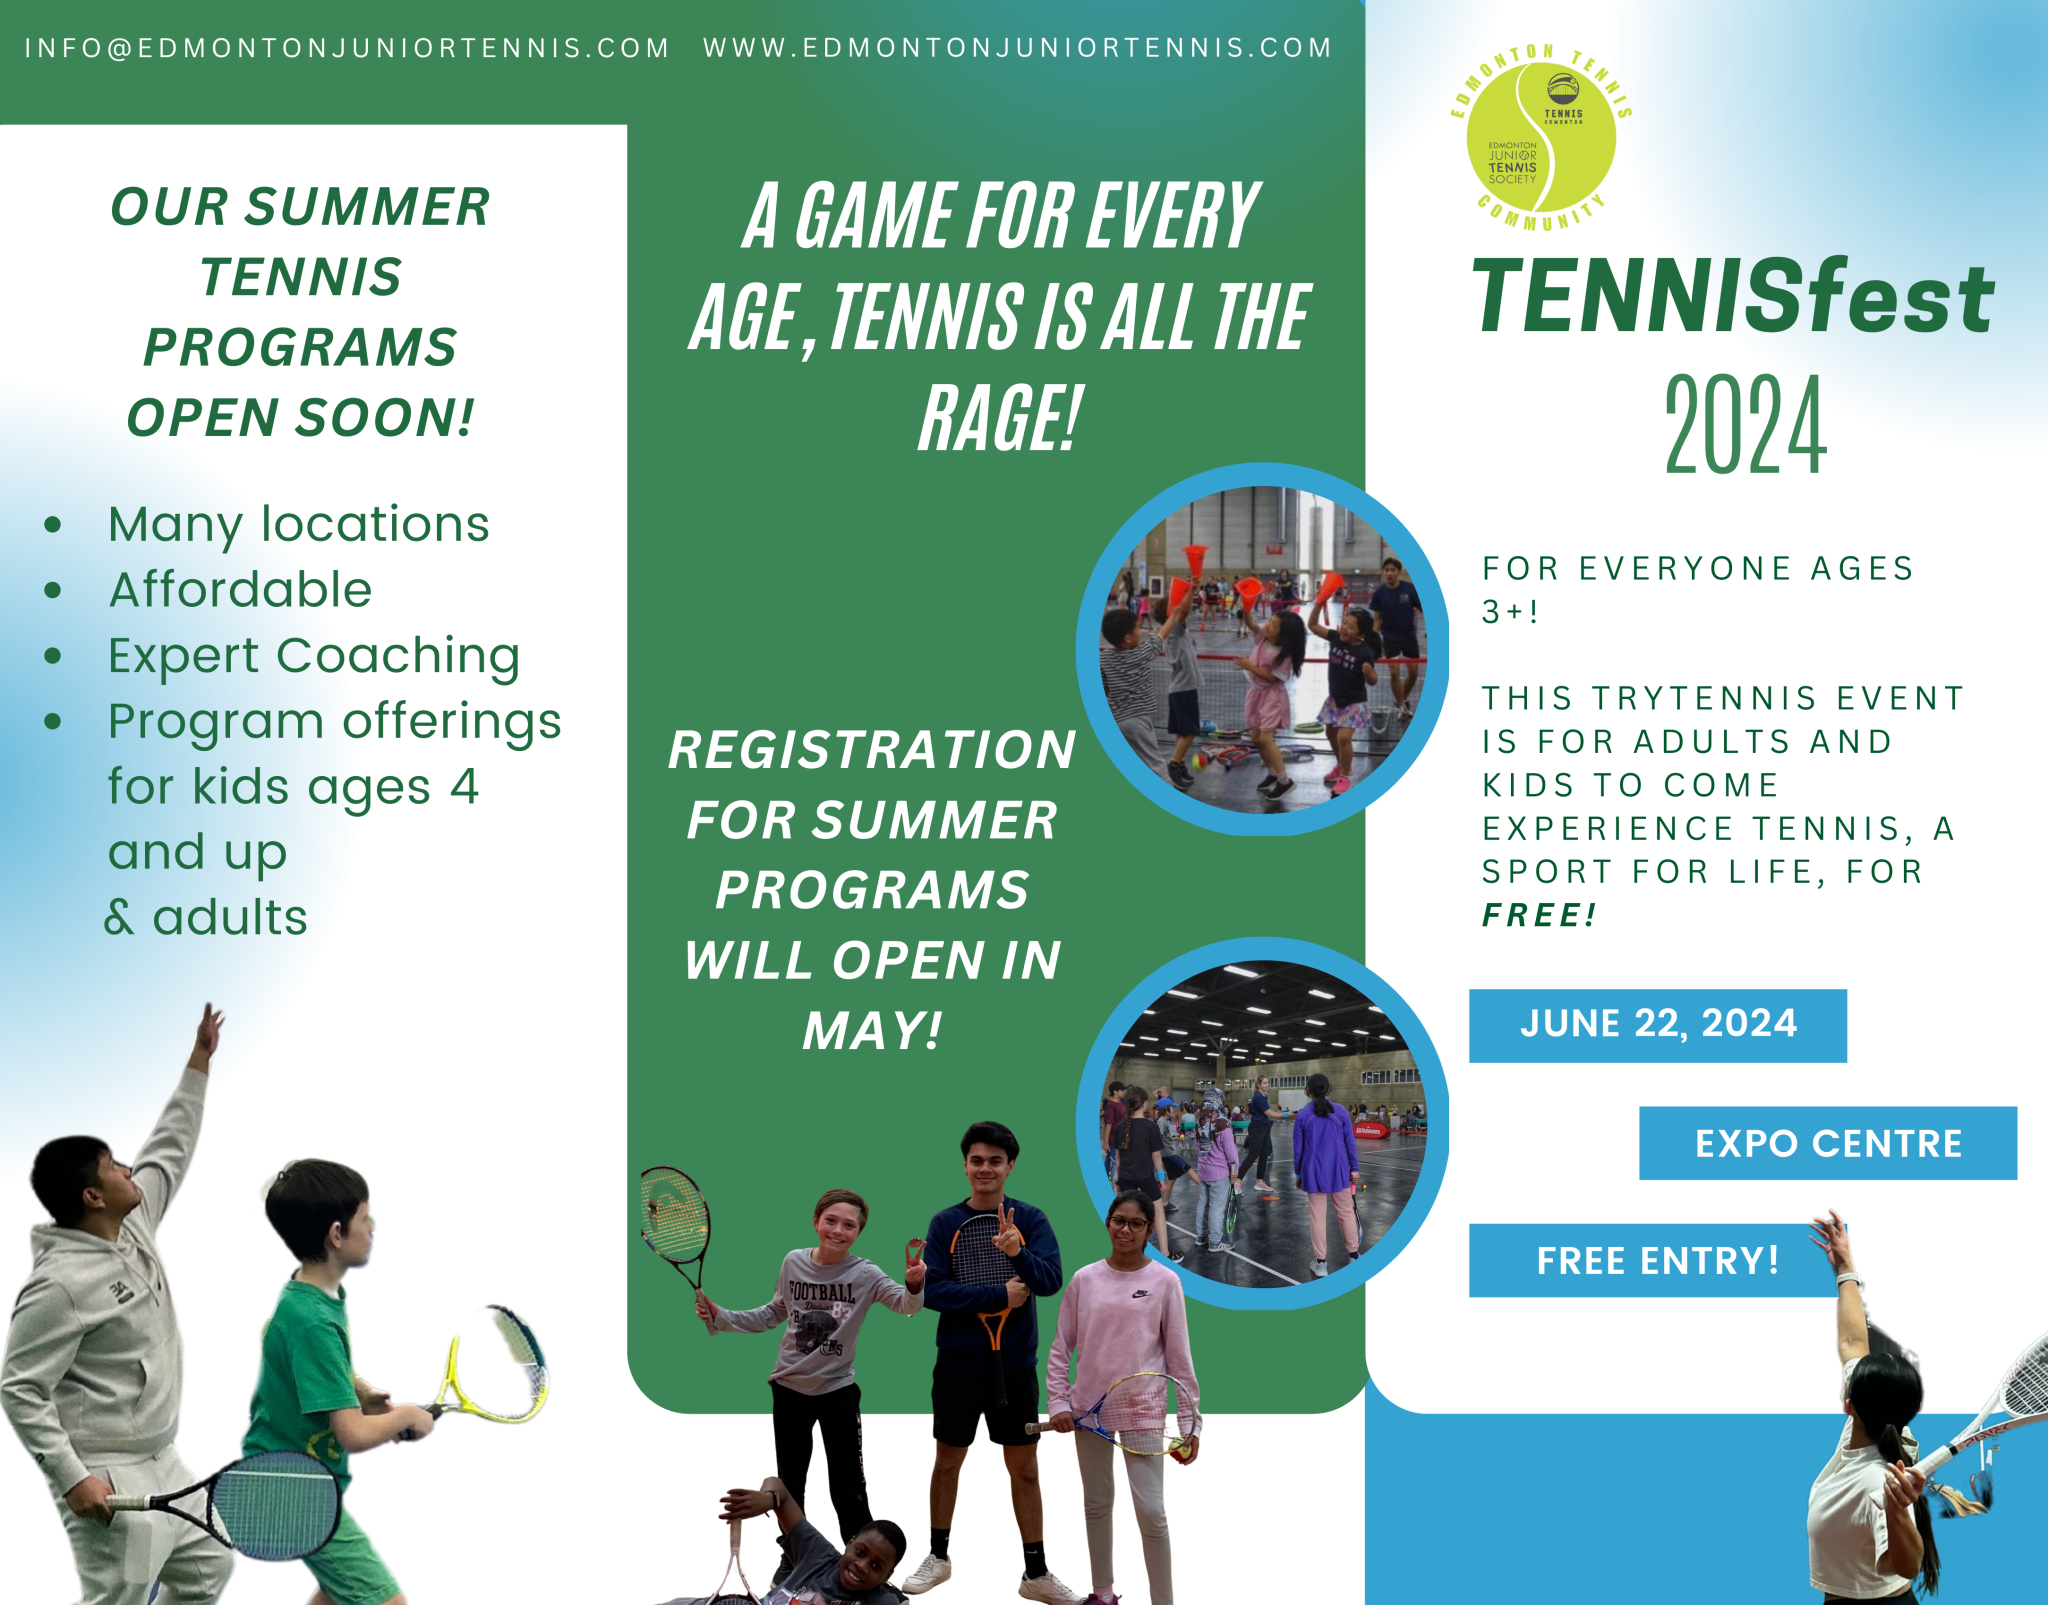 Edmonton Junior Tennis Association Tennisfest 2024 for more info email: info@edmontonjuniortennis.com